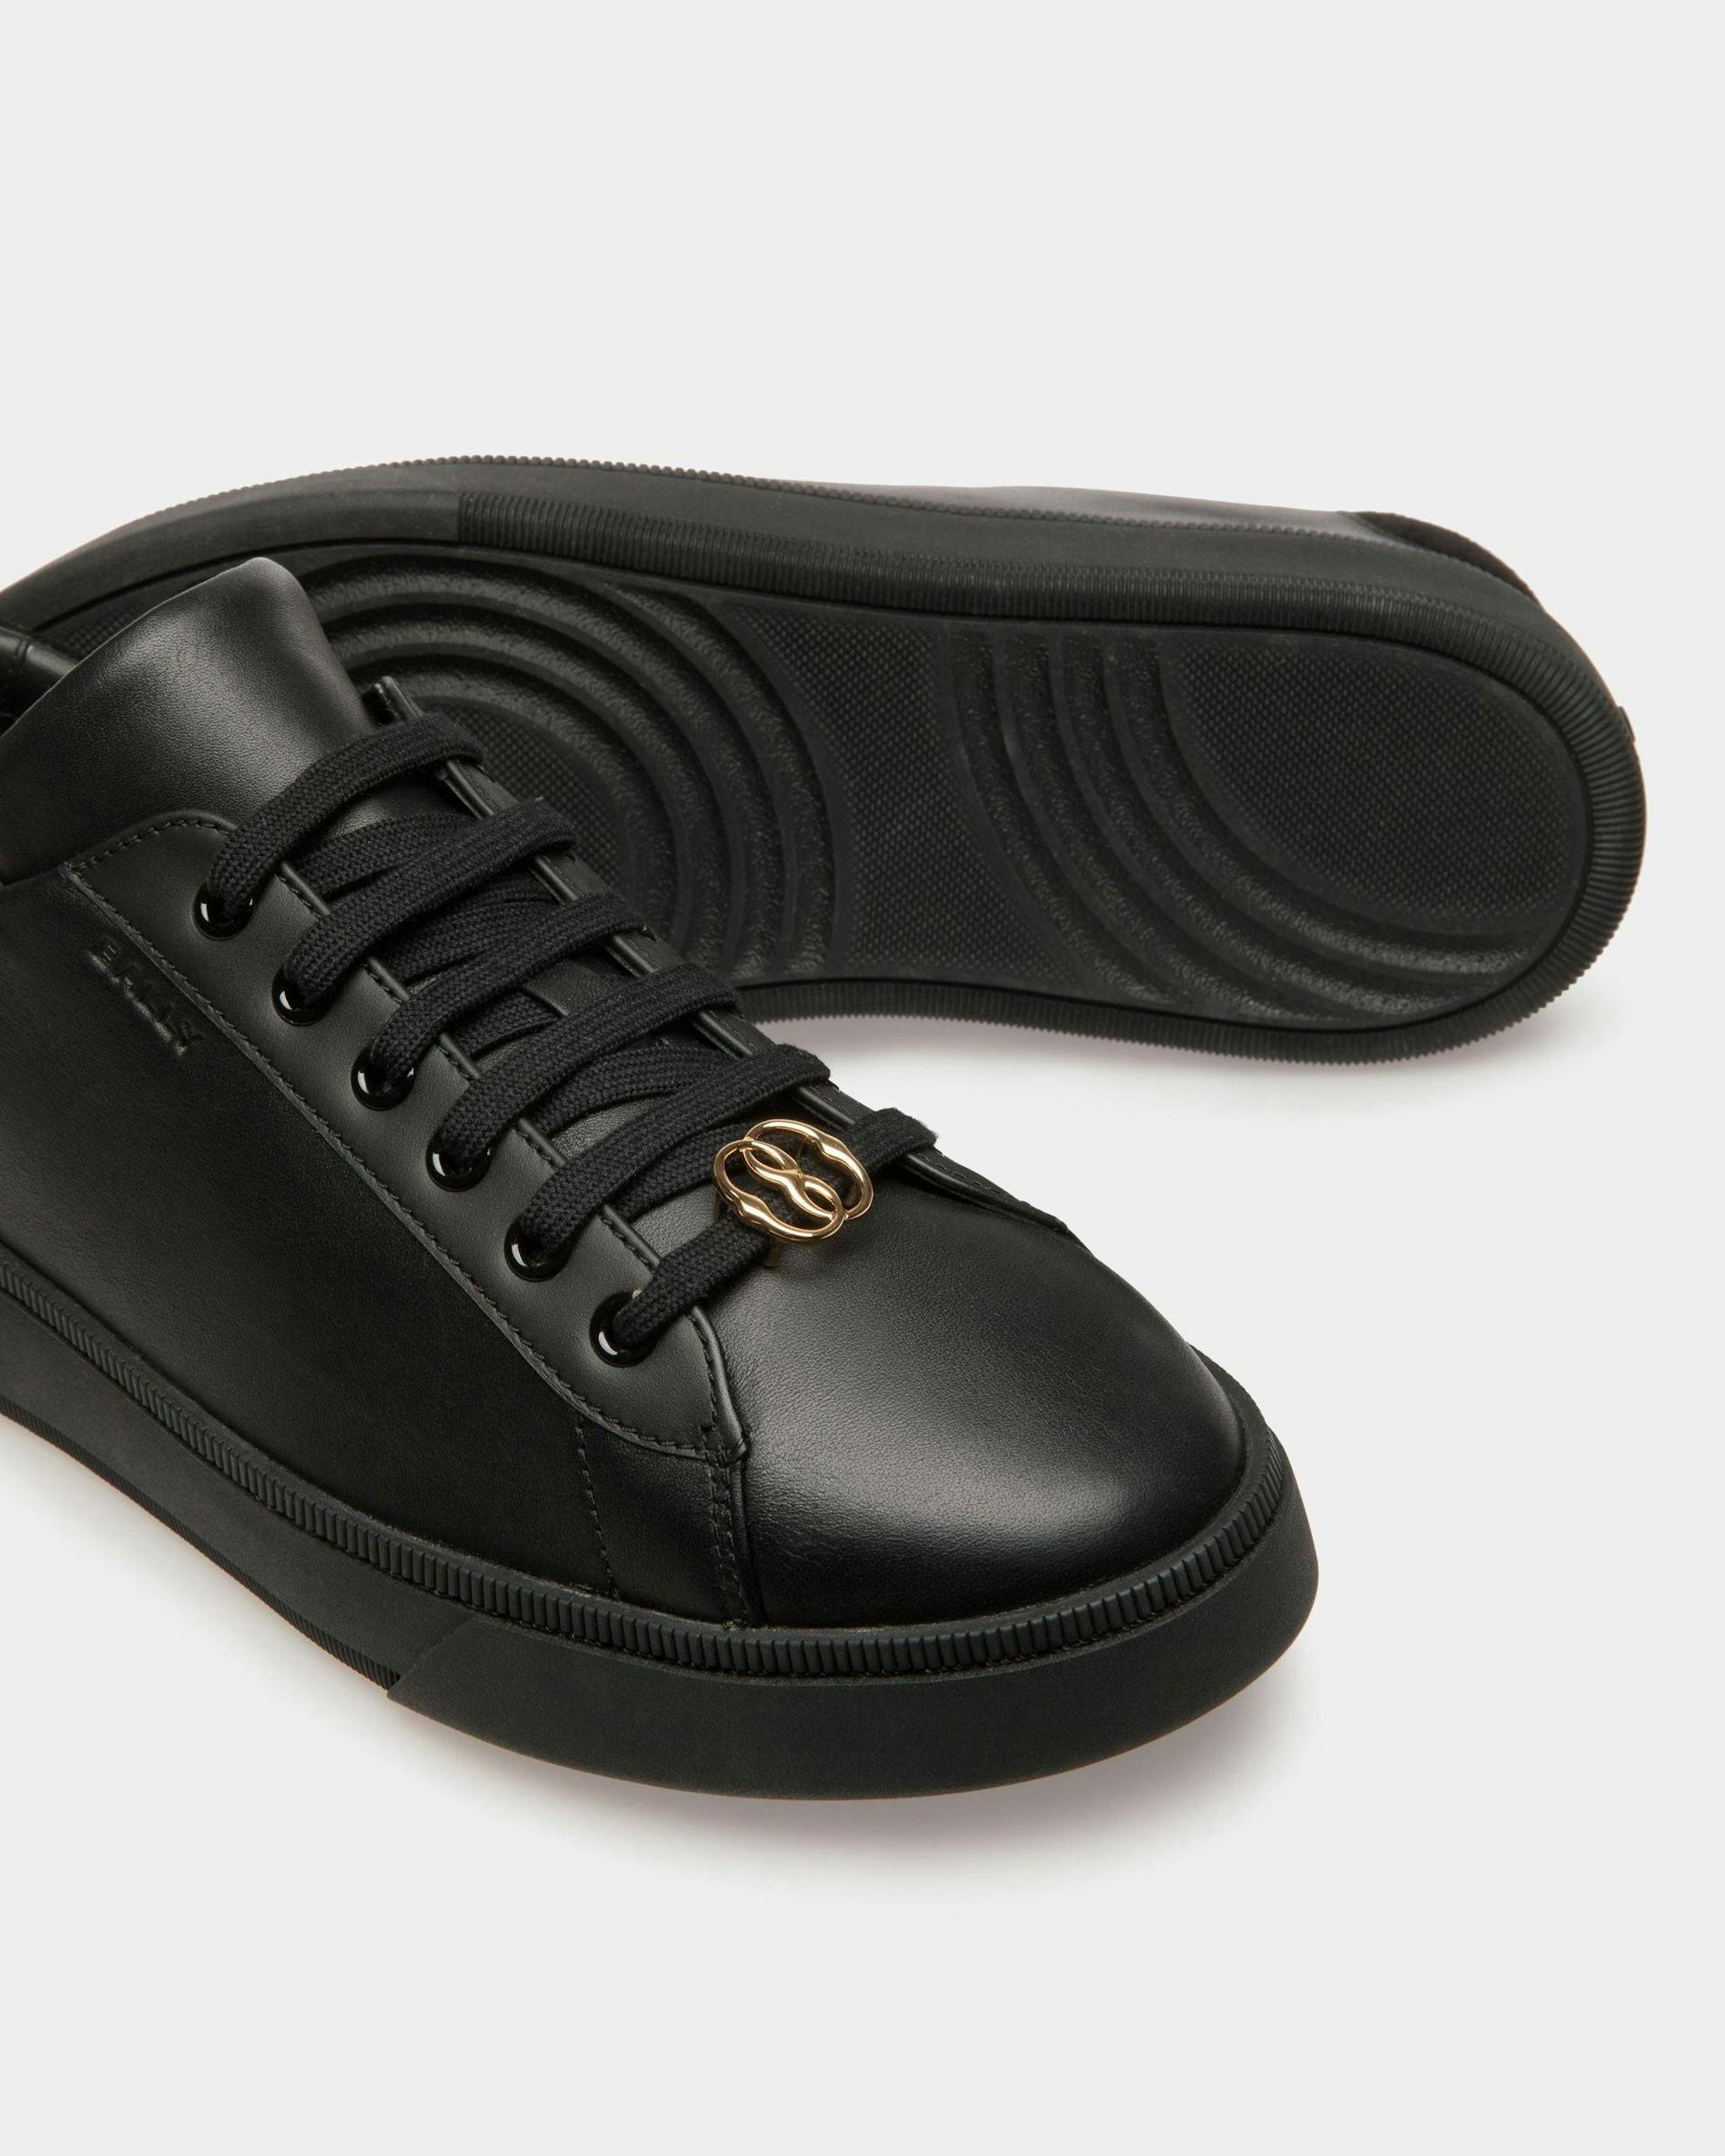 Raise Sneakers In Black Leather - Men's - Bally - 06